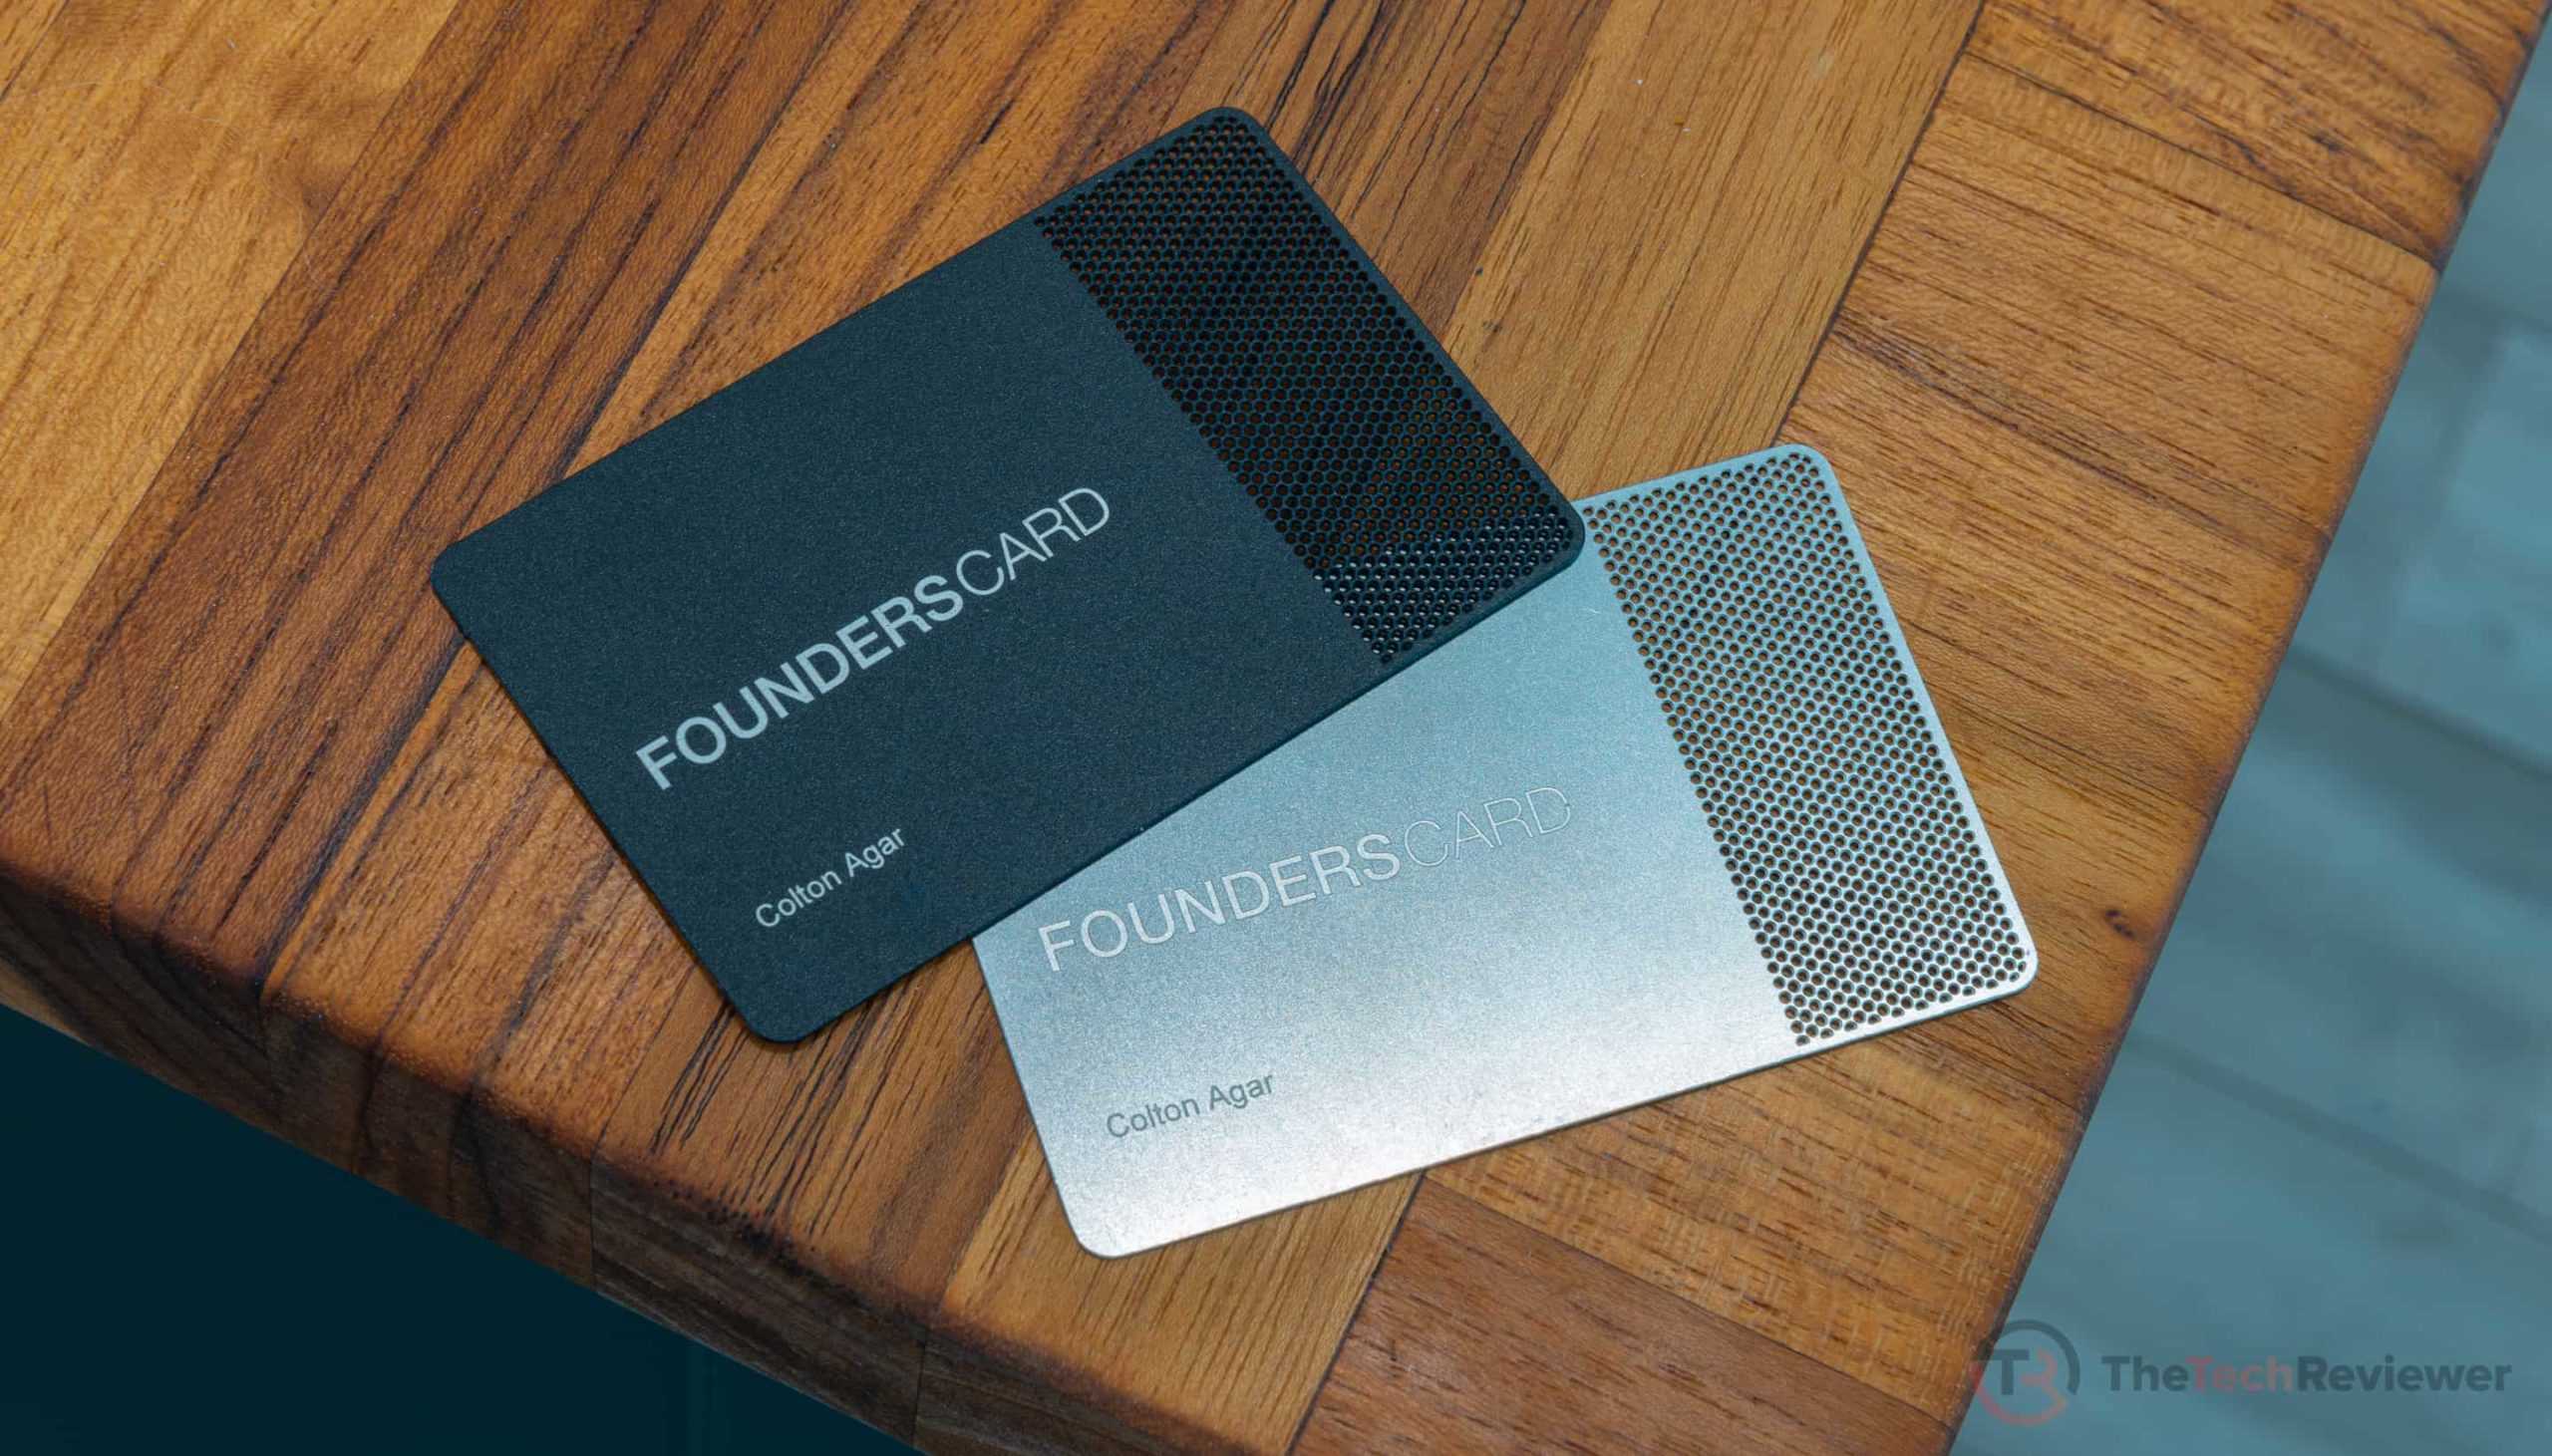 FoundersCard Review – A Premium Membership For Entrepreneurs